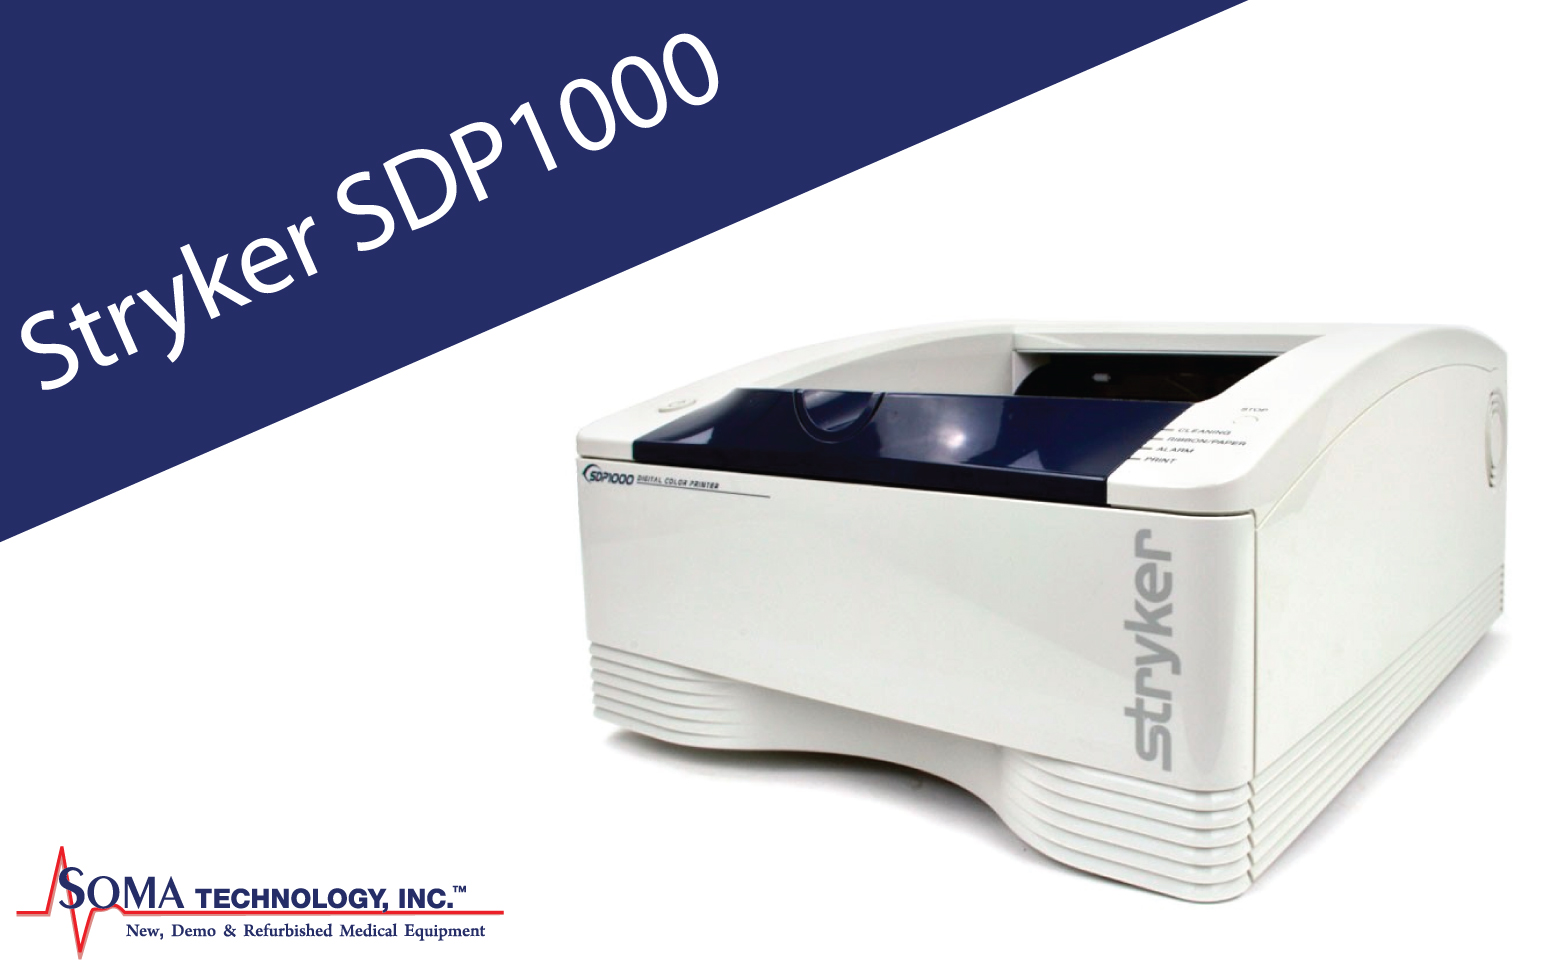 Stryker SDP1000 Printer - Soma Technology, Inc.